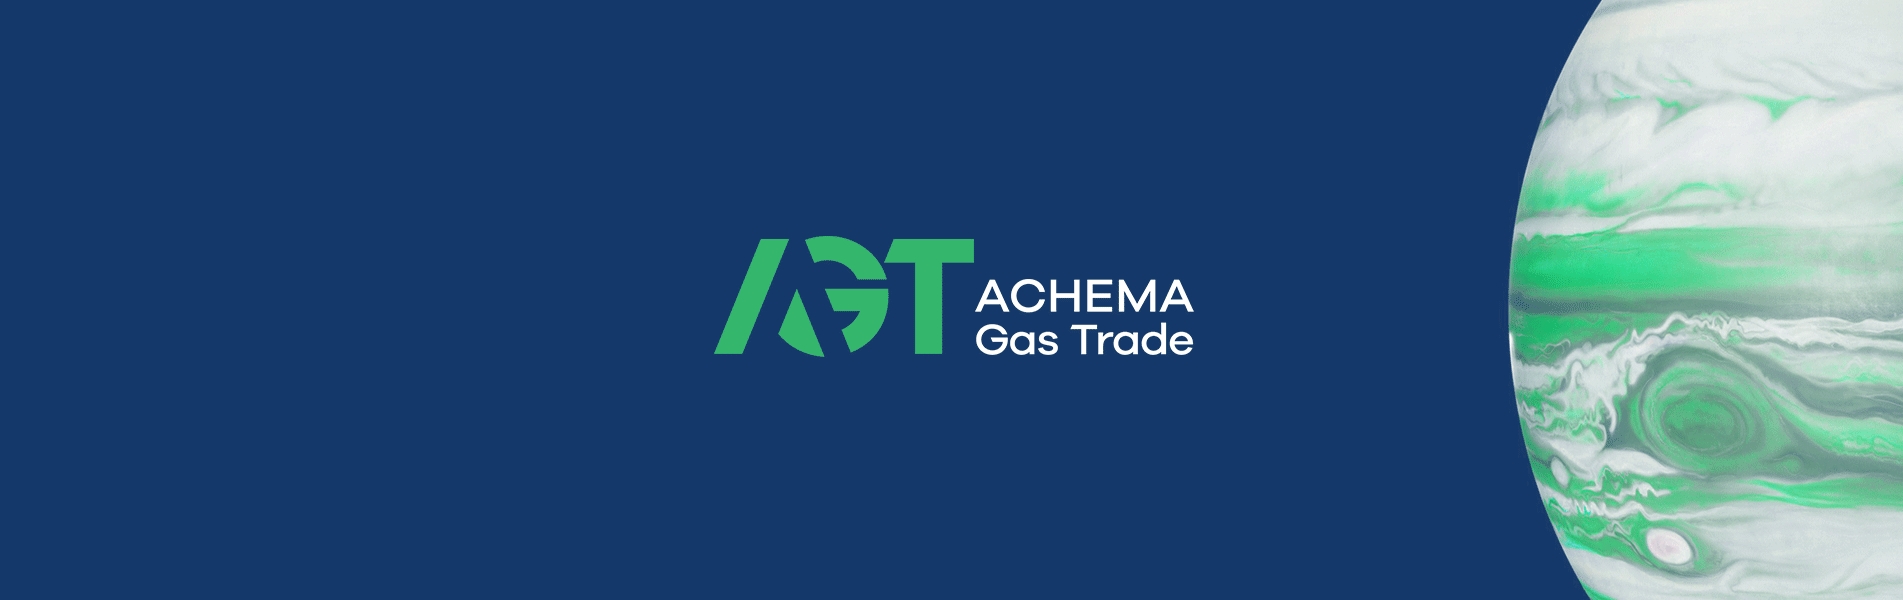 Achema Gas Trade